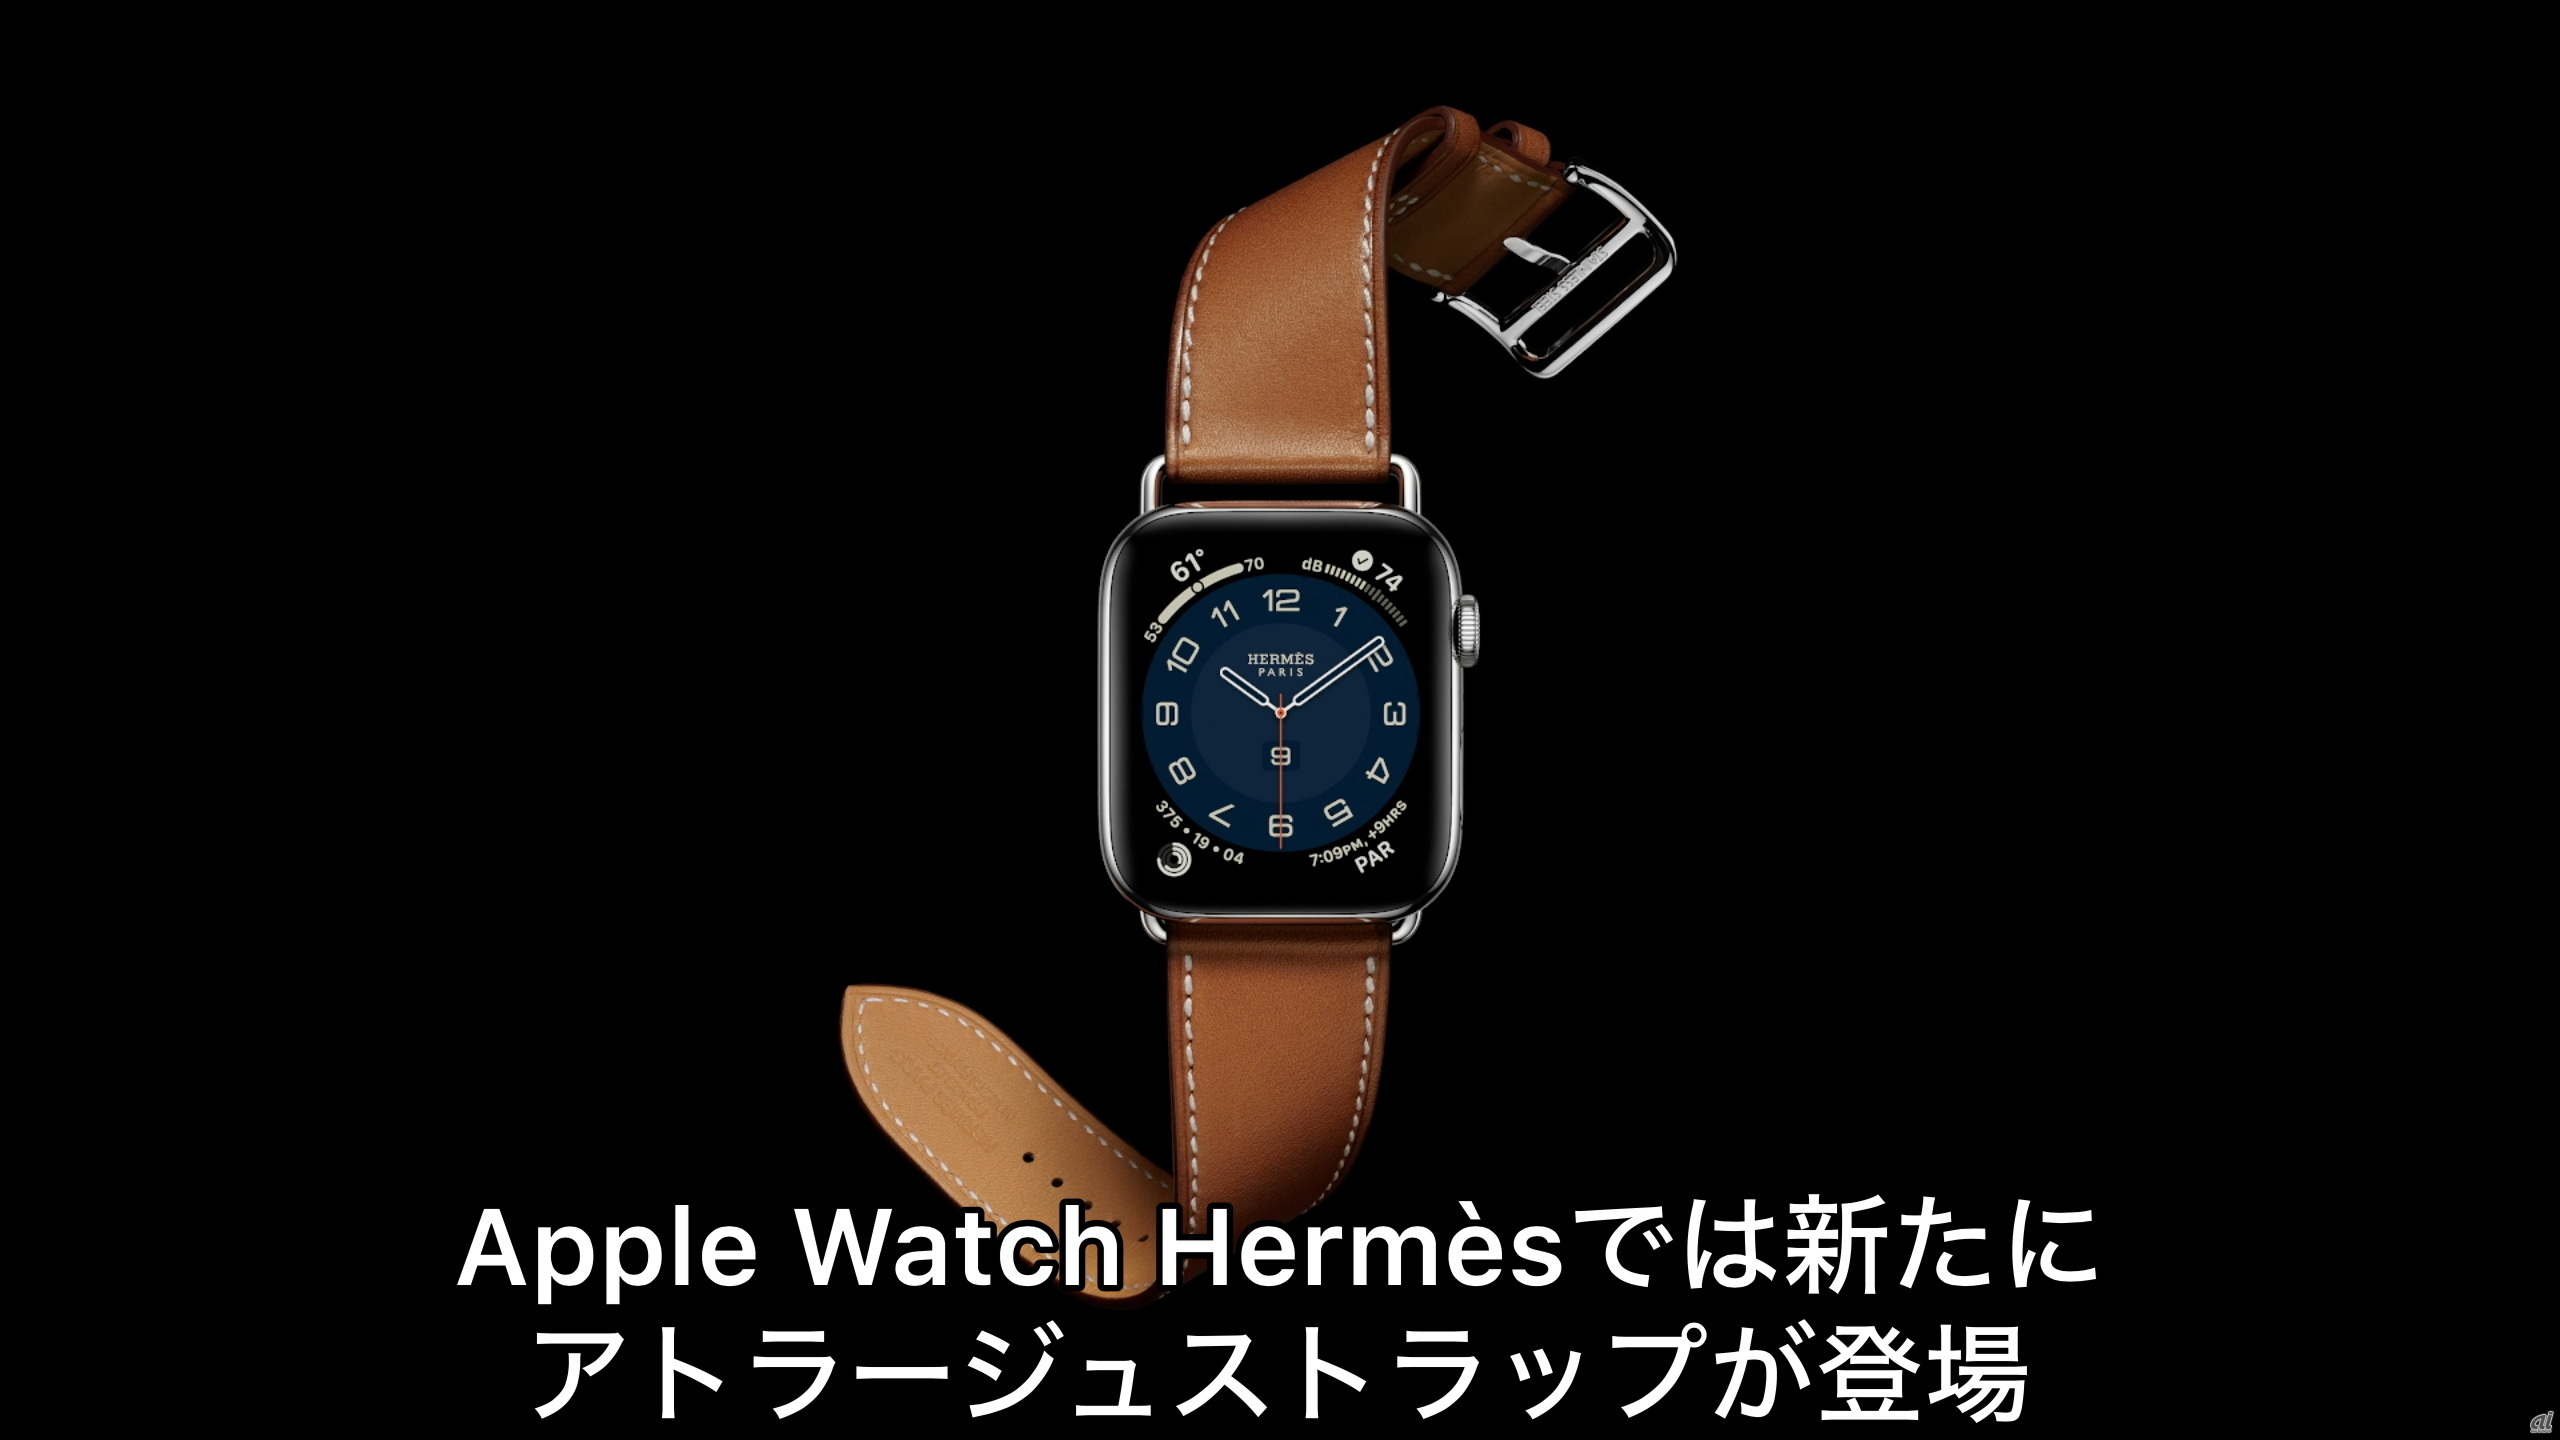 Apple Watch Hermèsには、アトラージュストラップが登場している